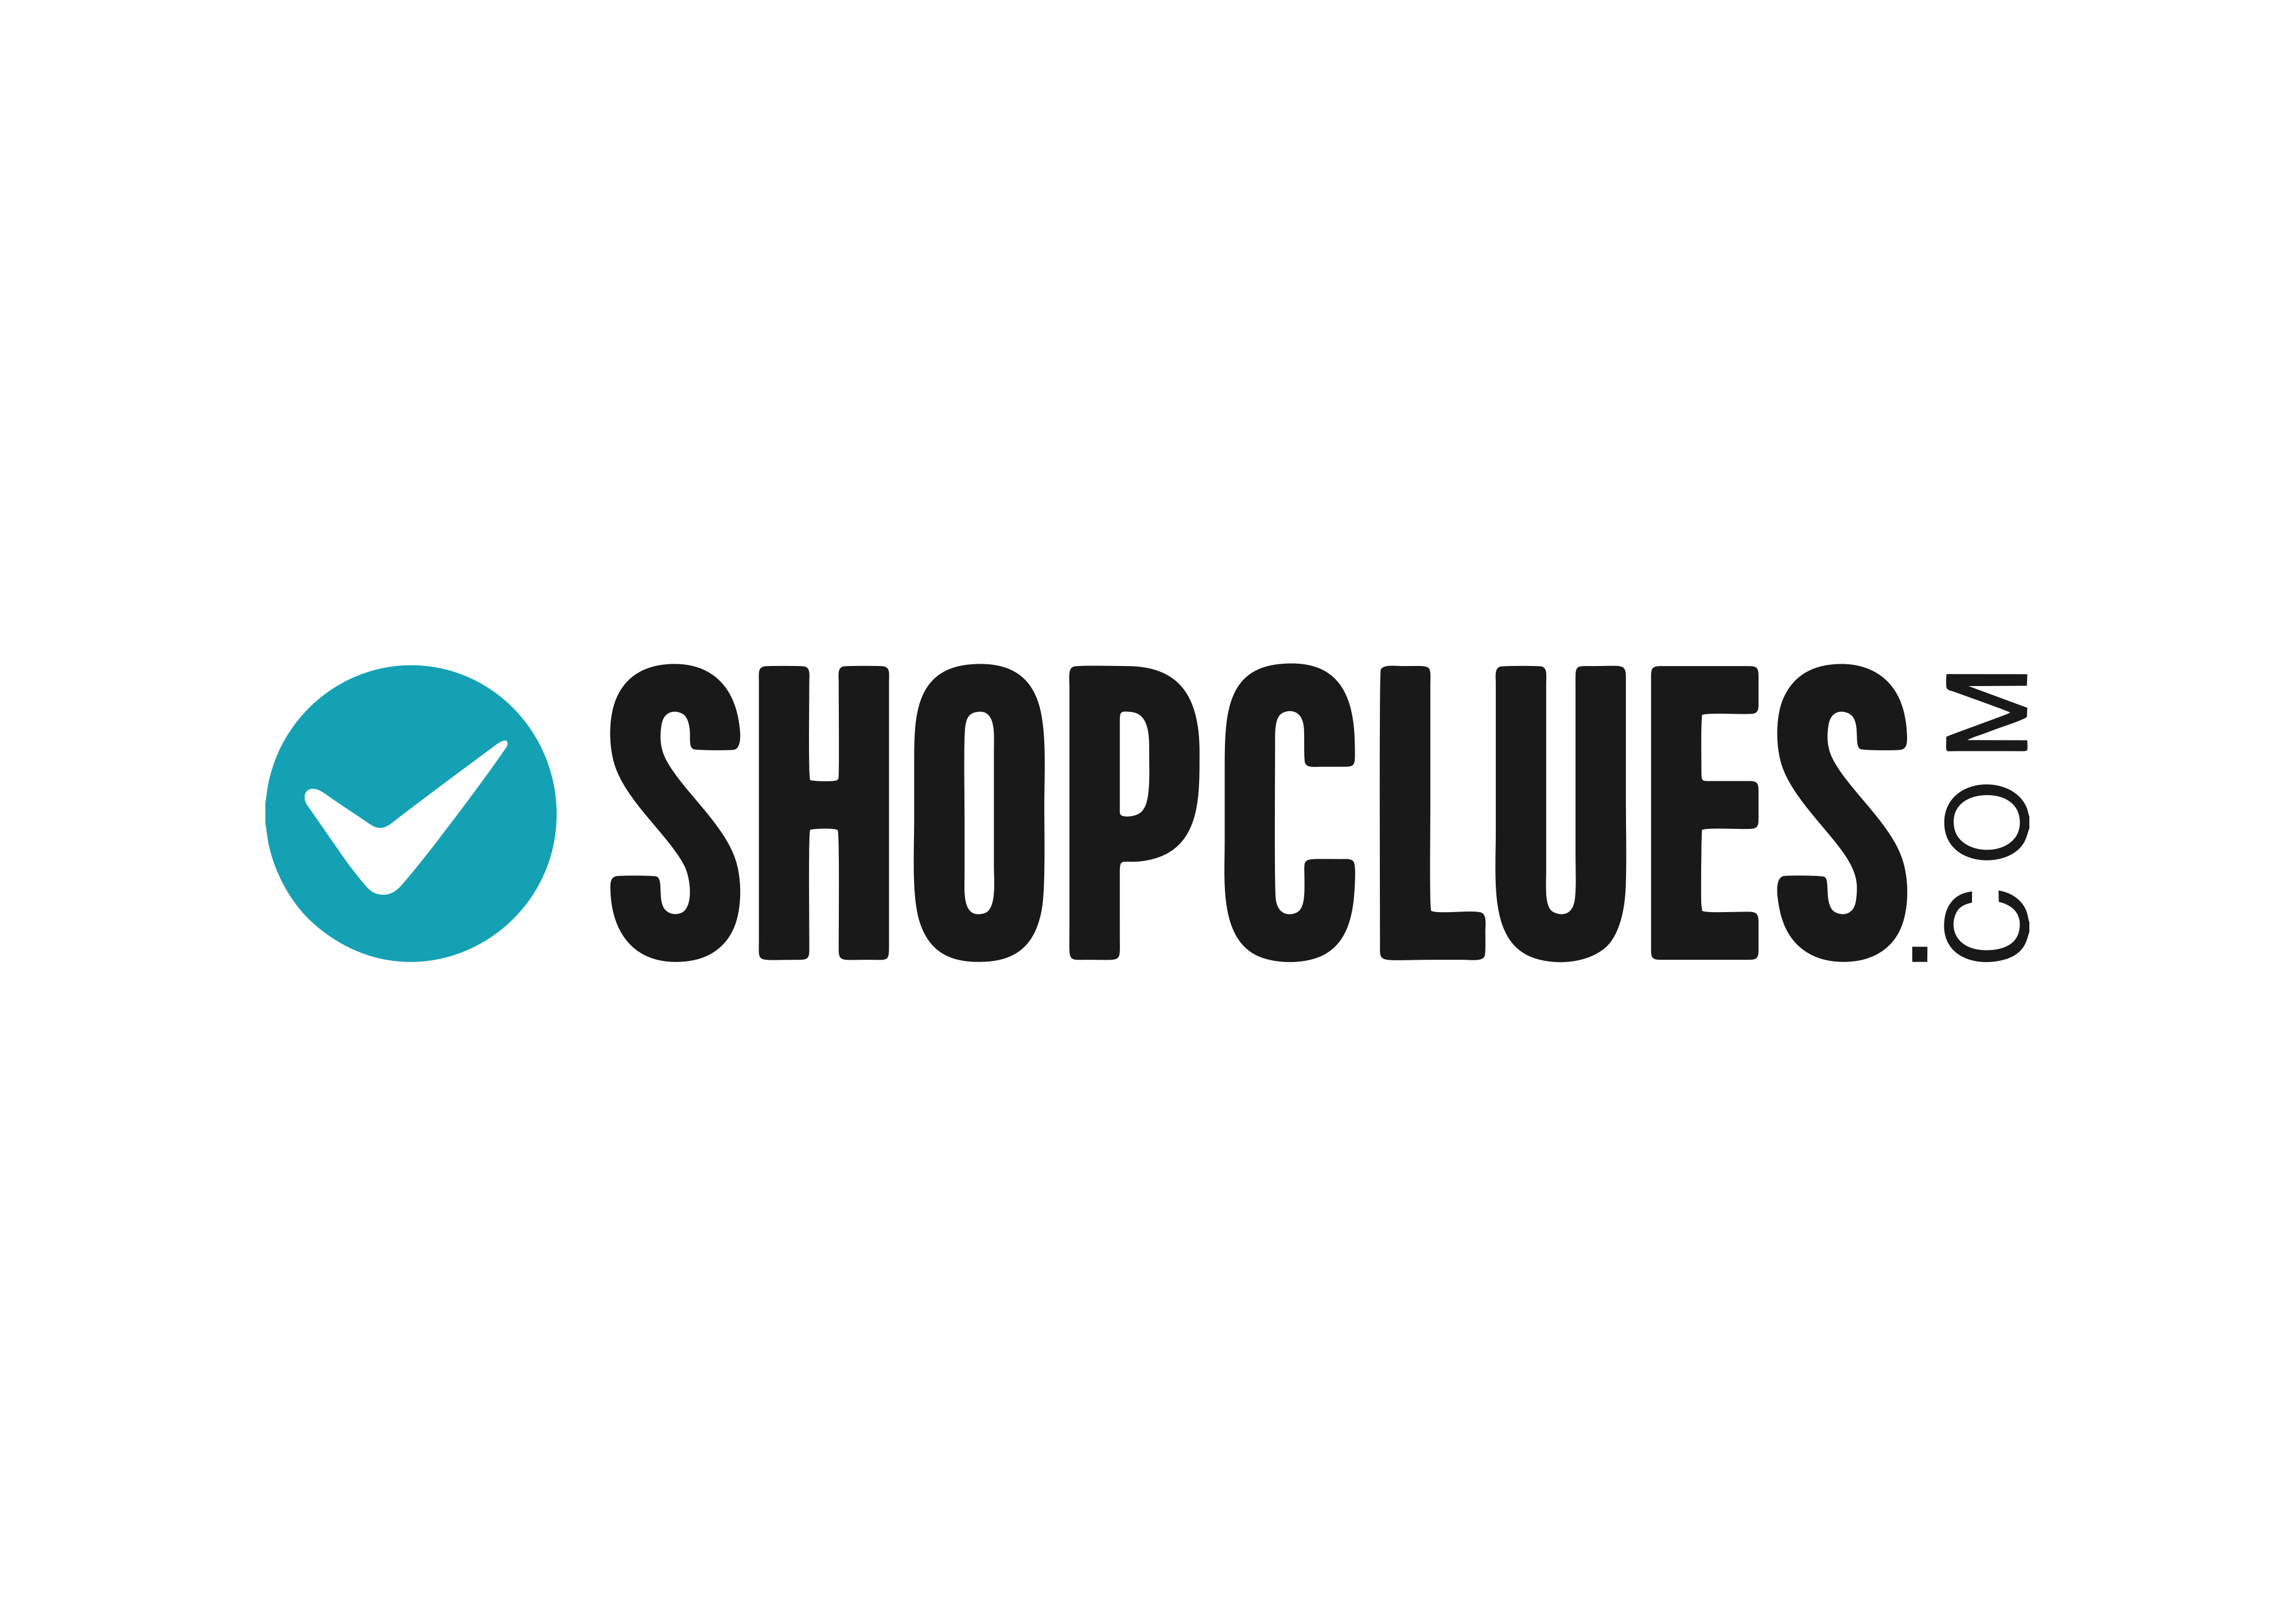 ShopClues logo - download.